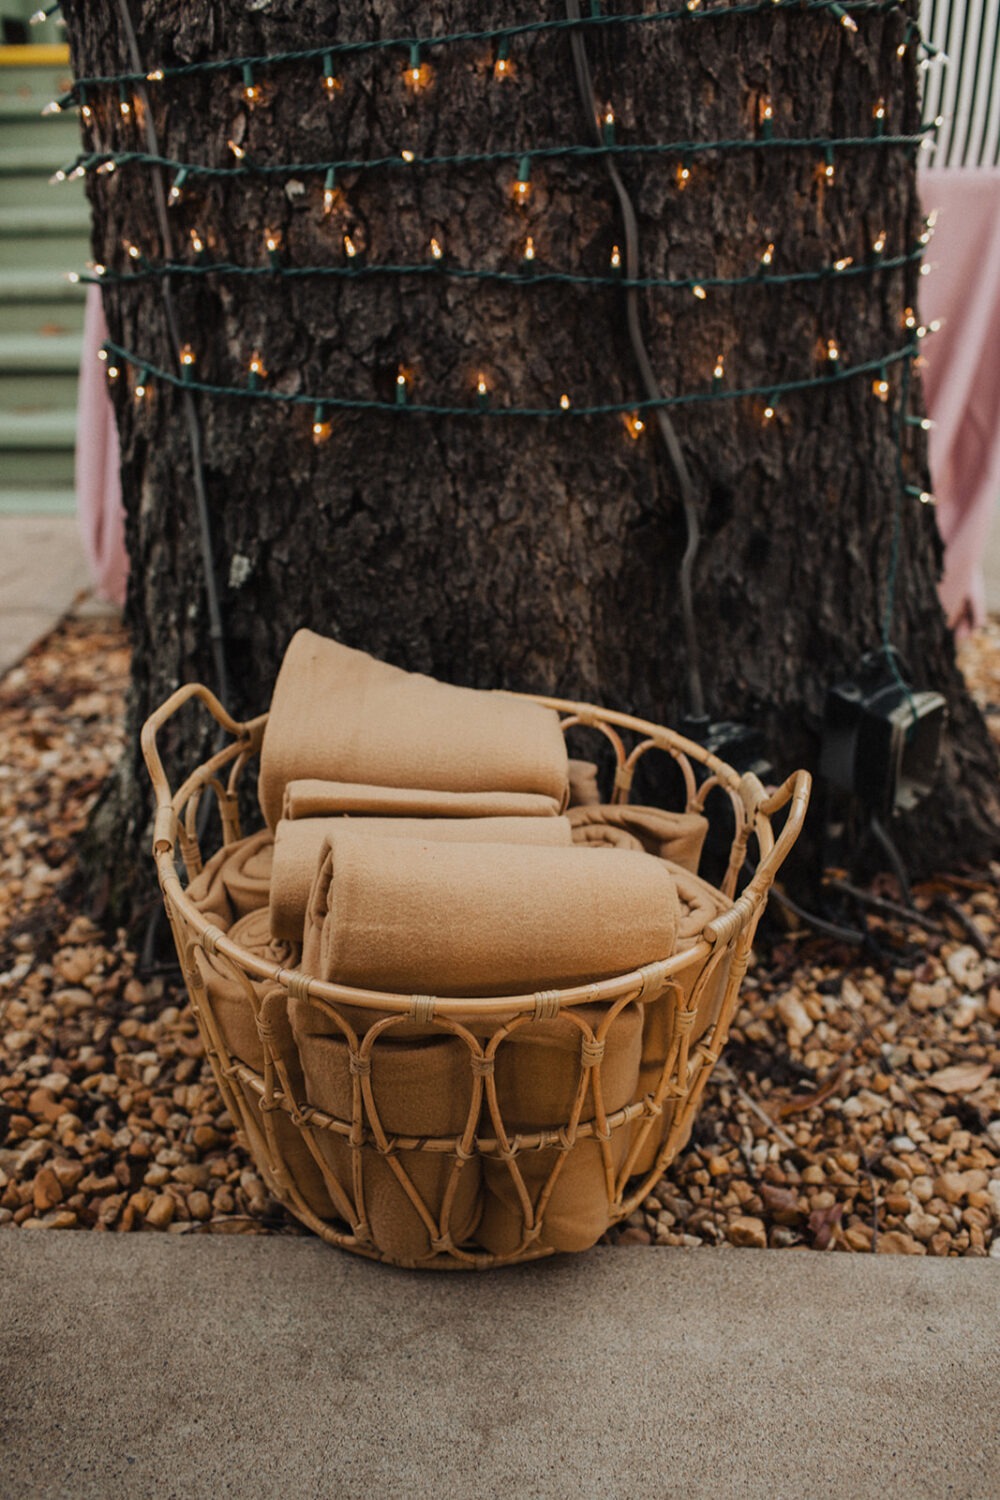 blankets in basket at wedding